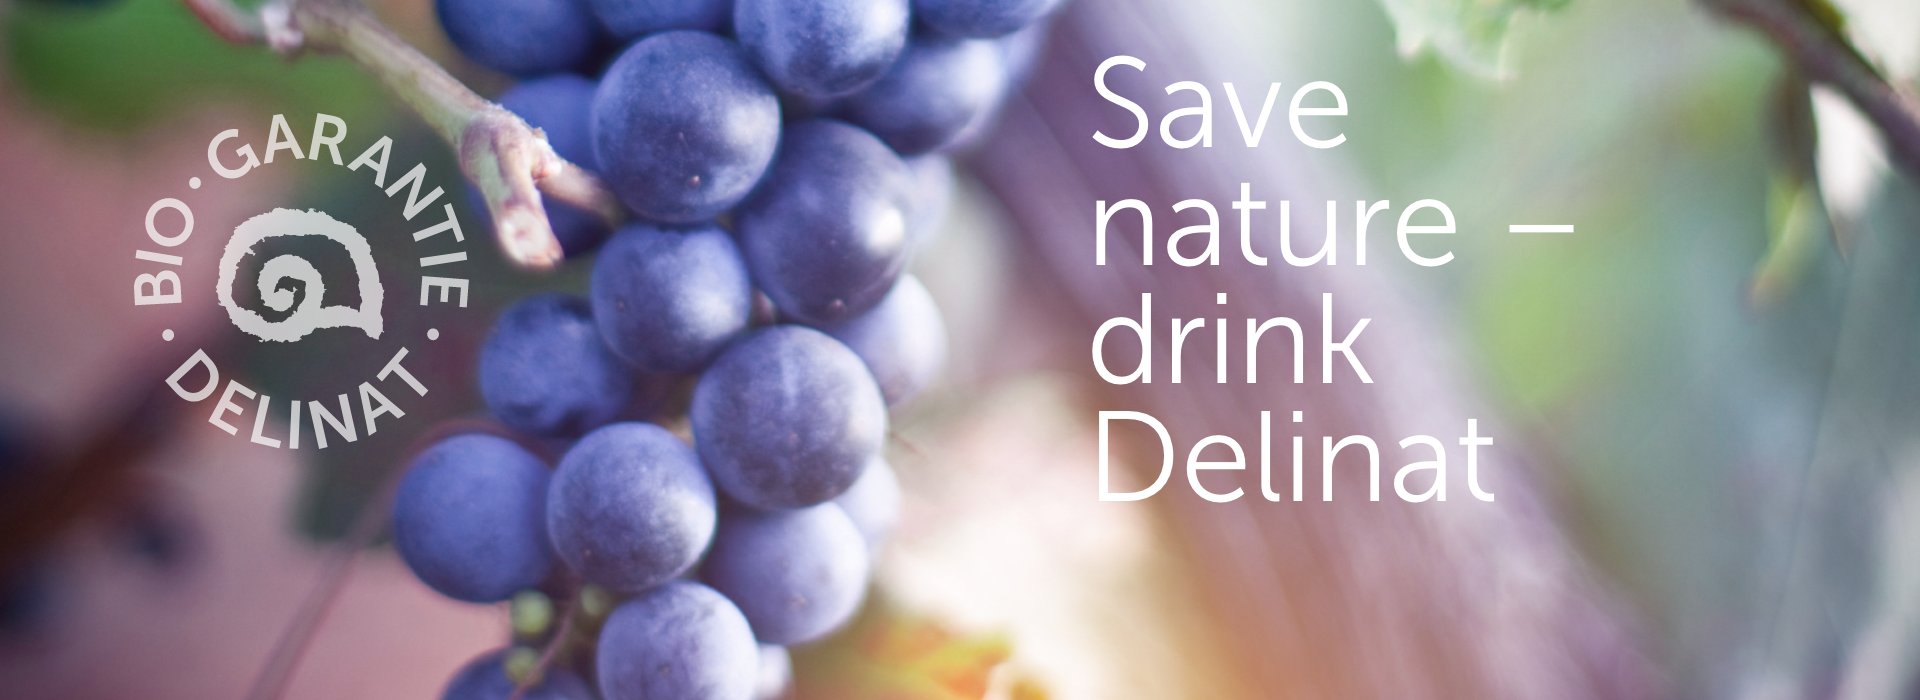 Save nature – drink Delinat!